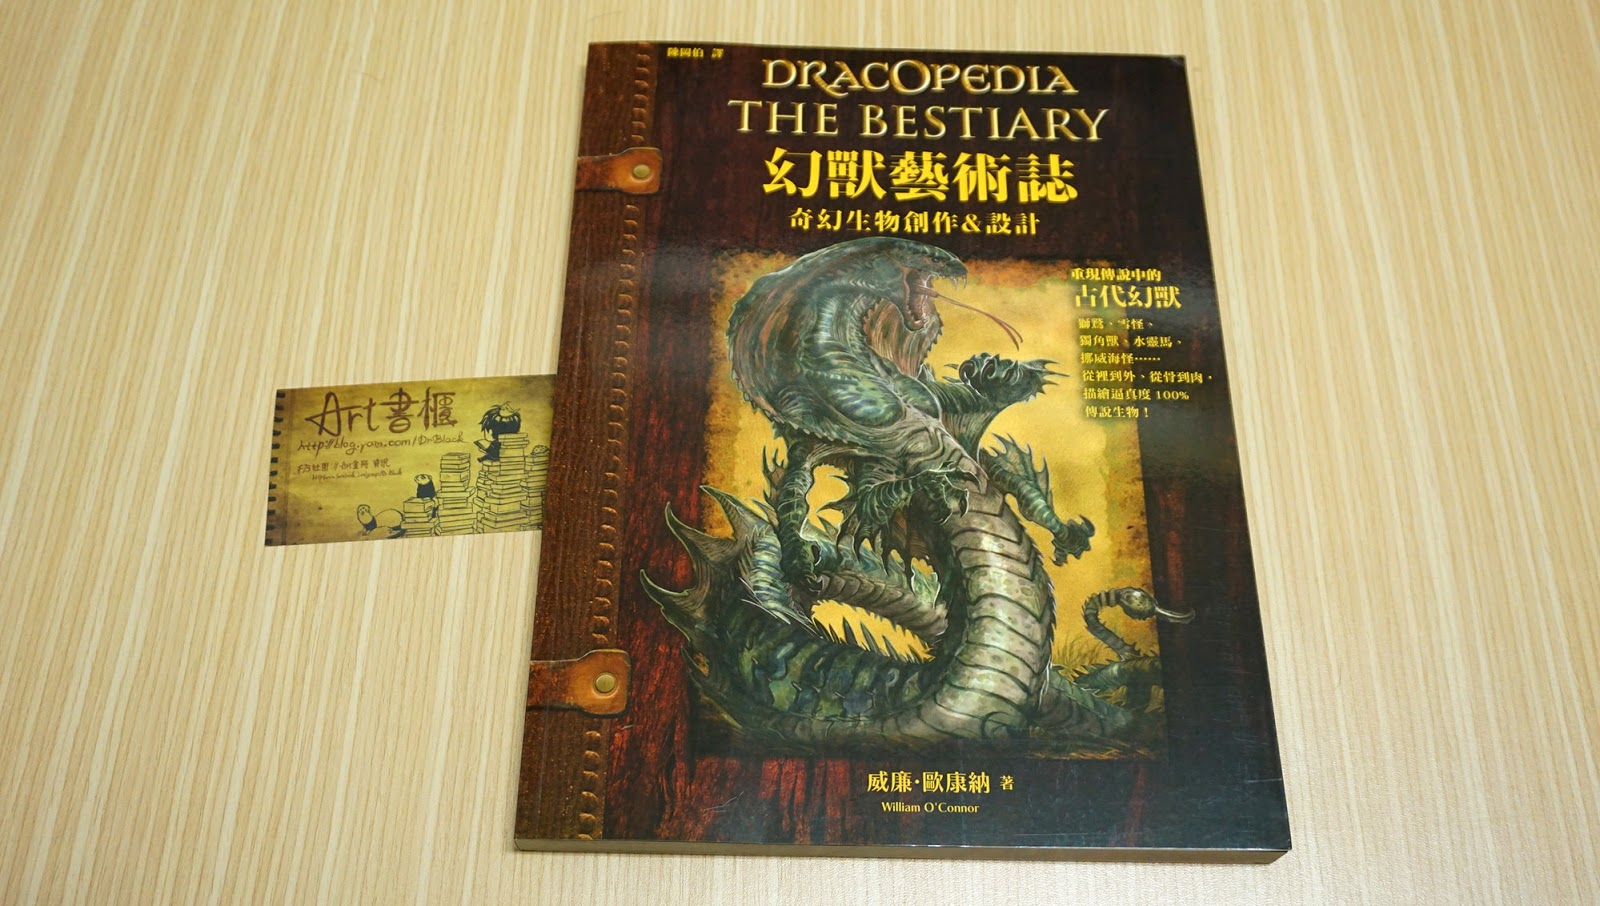 Art書櫃book Review 幻獸藝術誌 奇幻生物創作 設計 Dracopedia The Bestiary An Artist S Guide To Creating Mythical Creatures